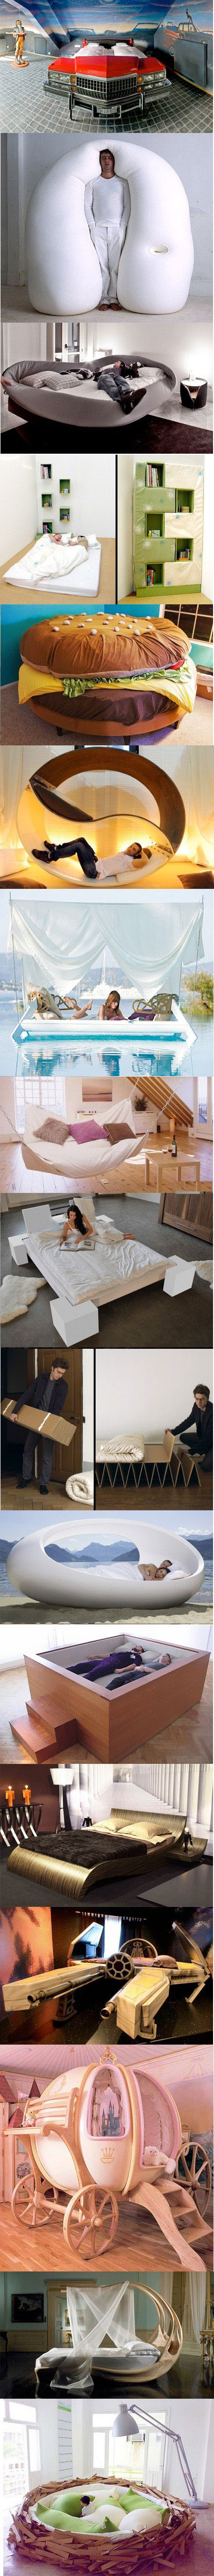 Creative bed designs